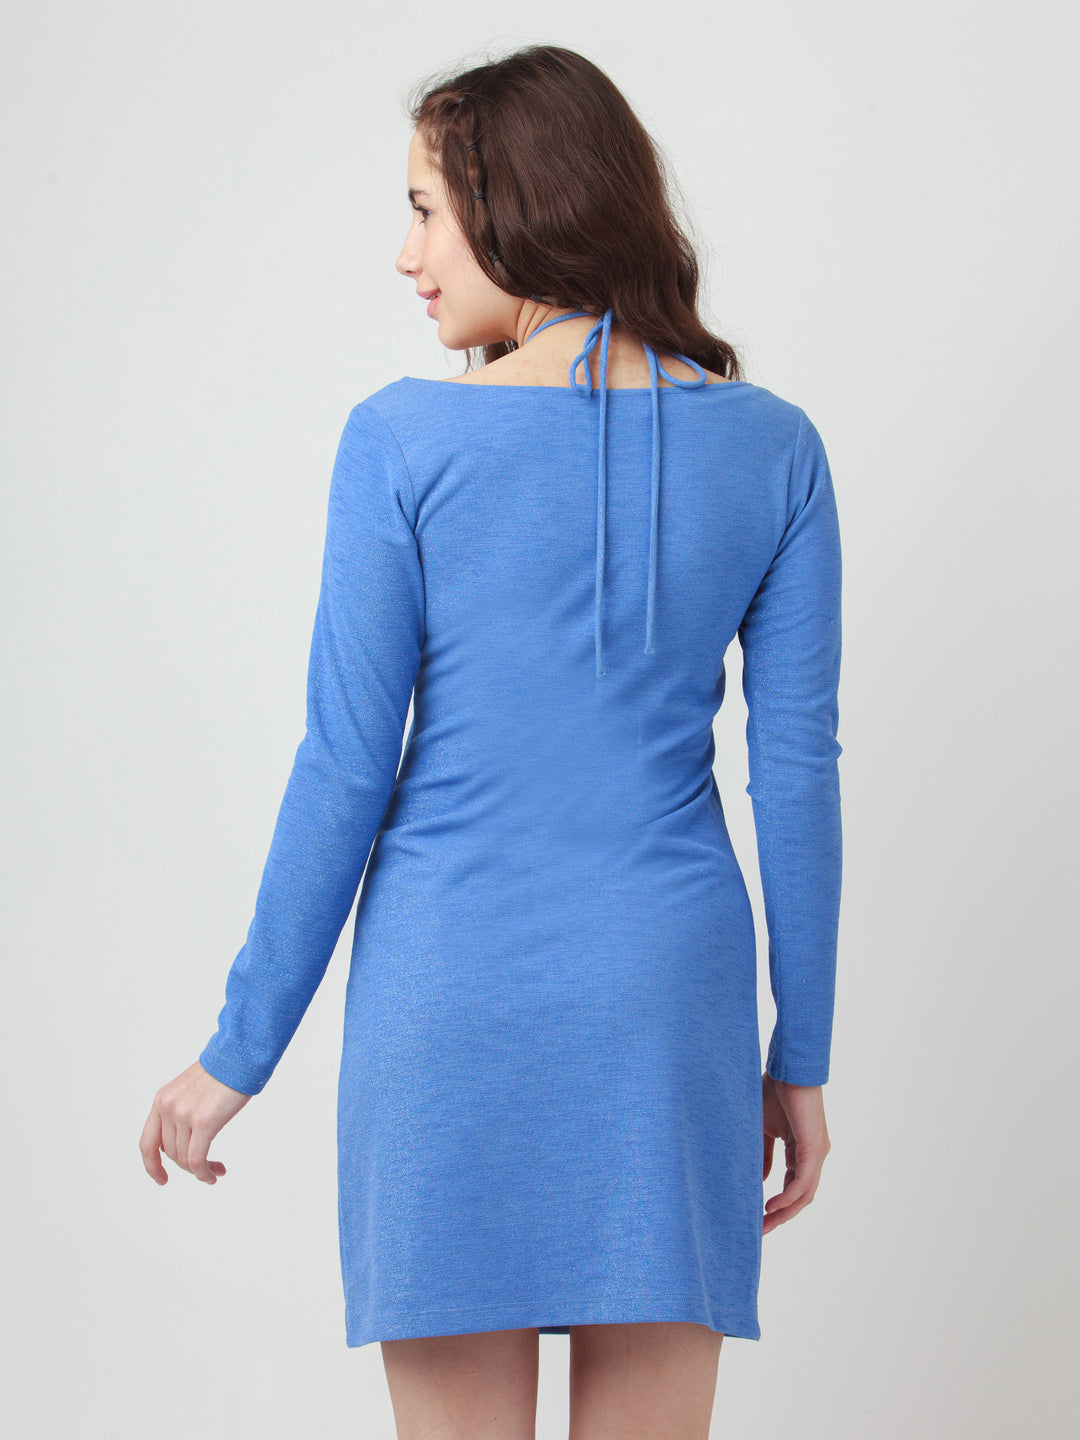 Blue Shimmer Tie-Up Short Dress For Women